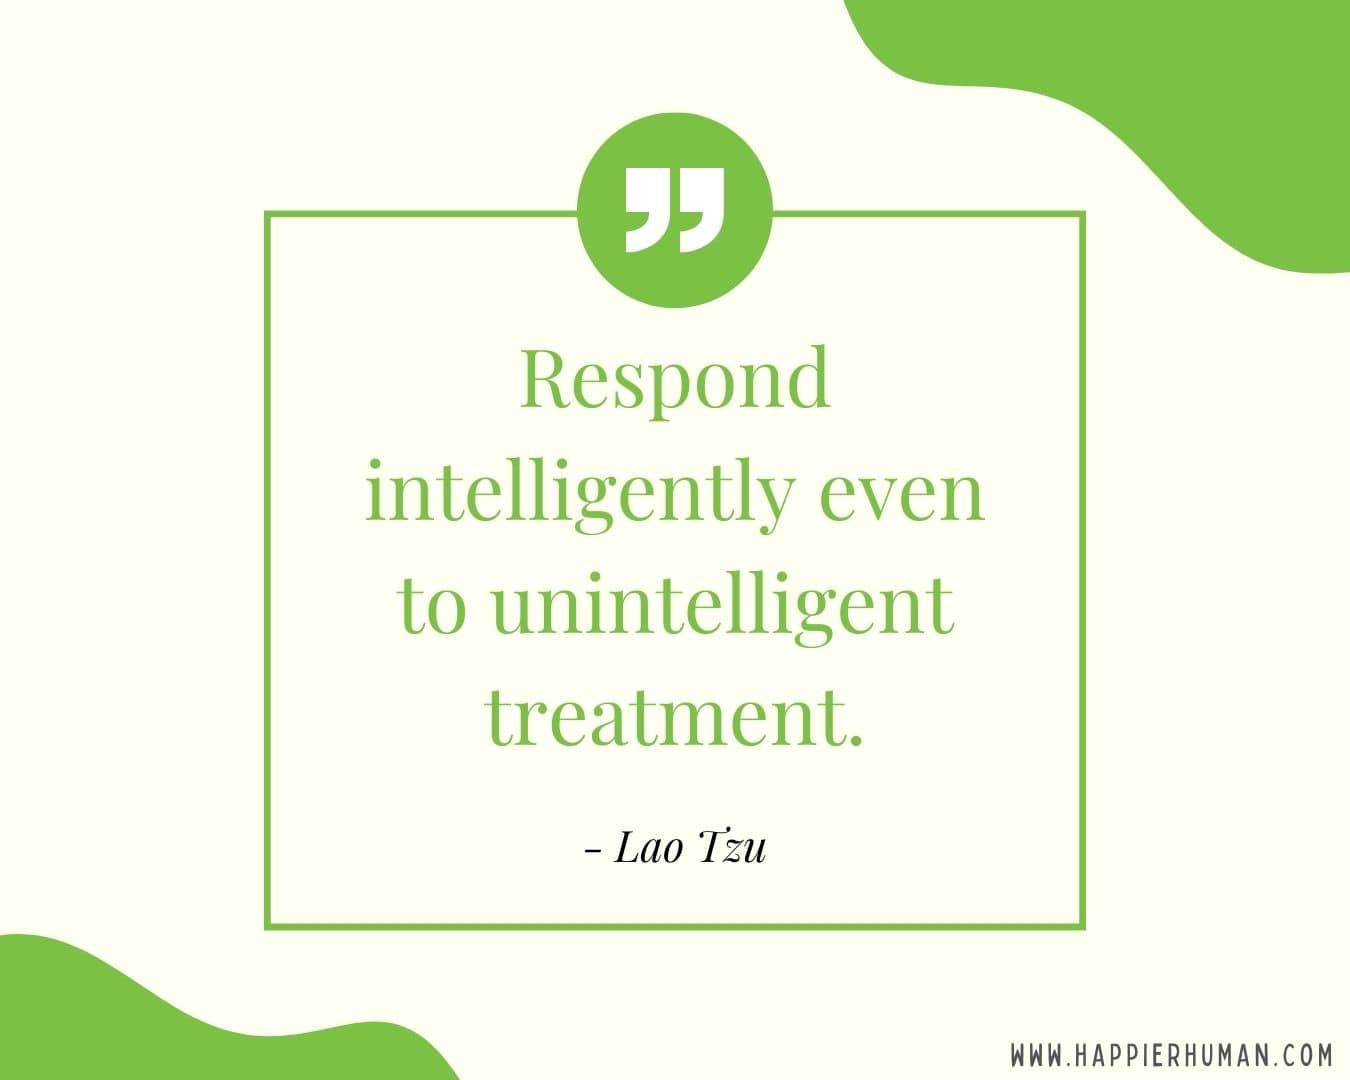 Broken Trust Quotes - “Respond intelligently even to unintelligent treatment.” - Lao Tzu